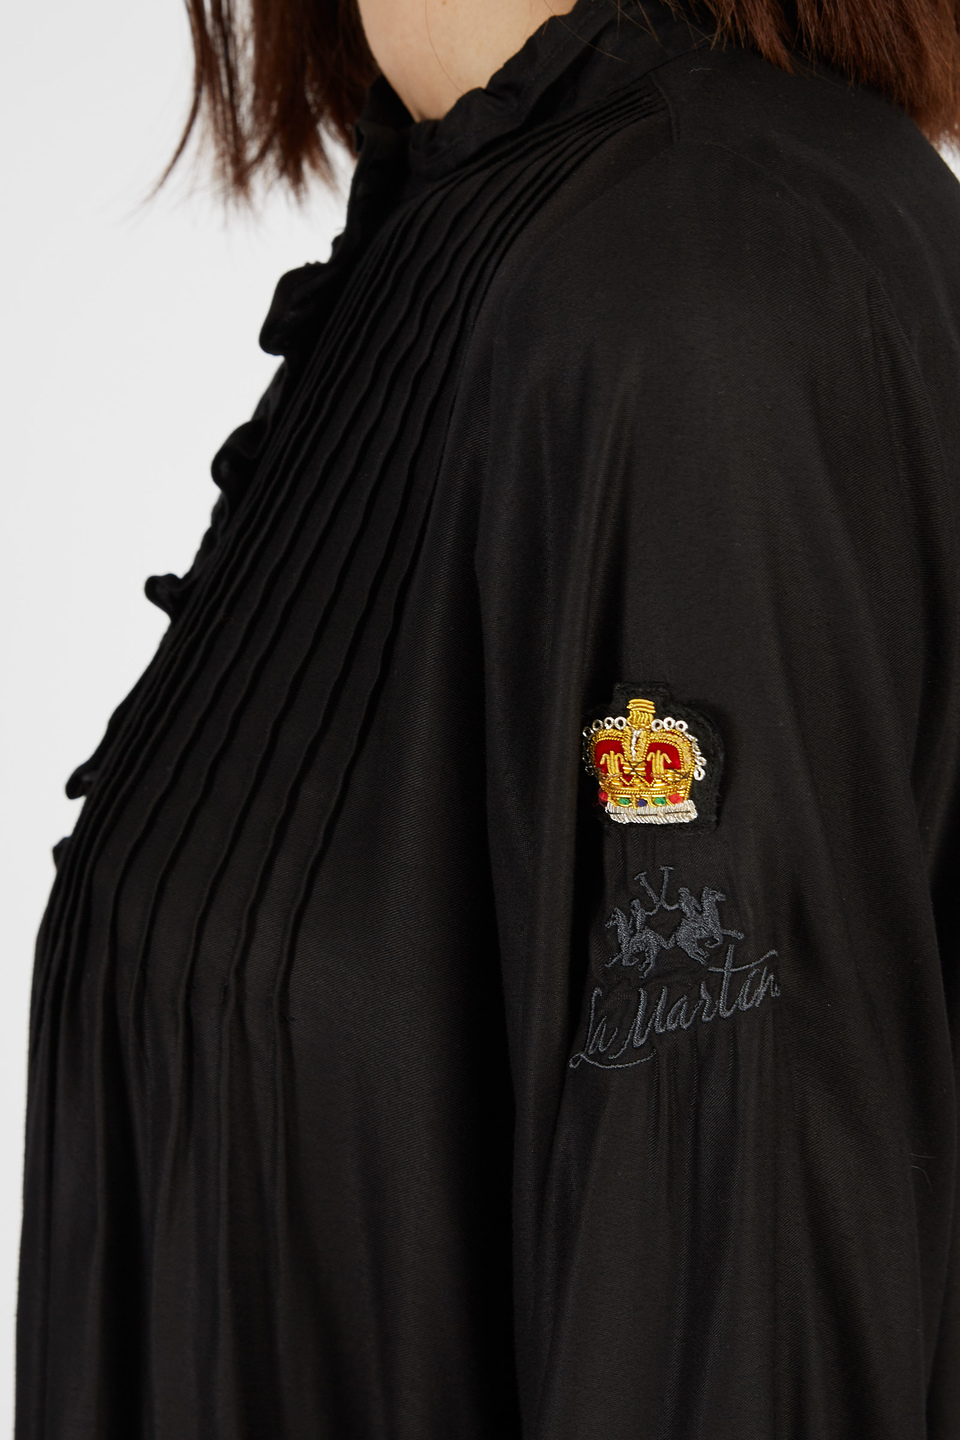 Dress long sleeves England solid color | La Martina - Official Online Shop